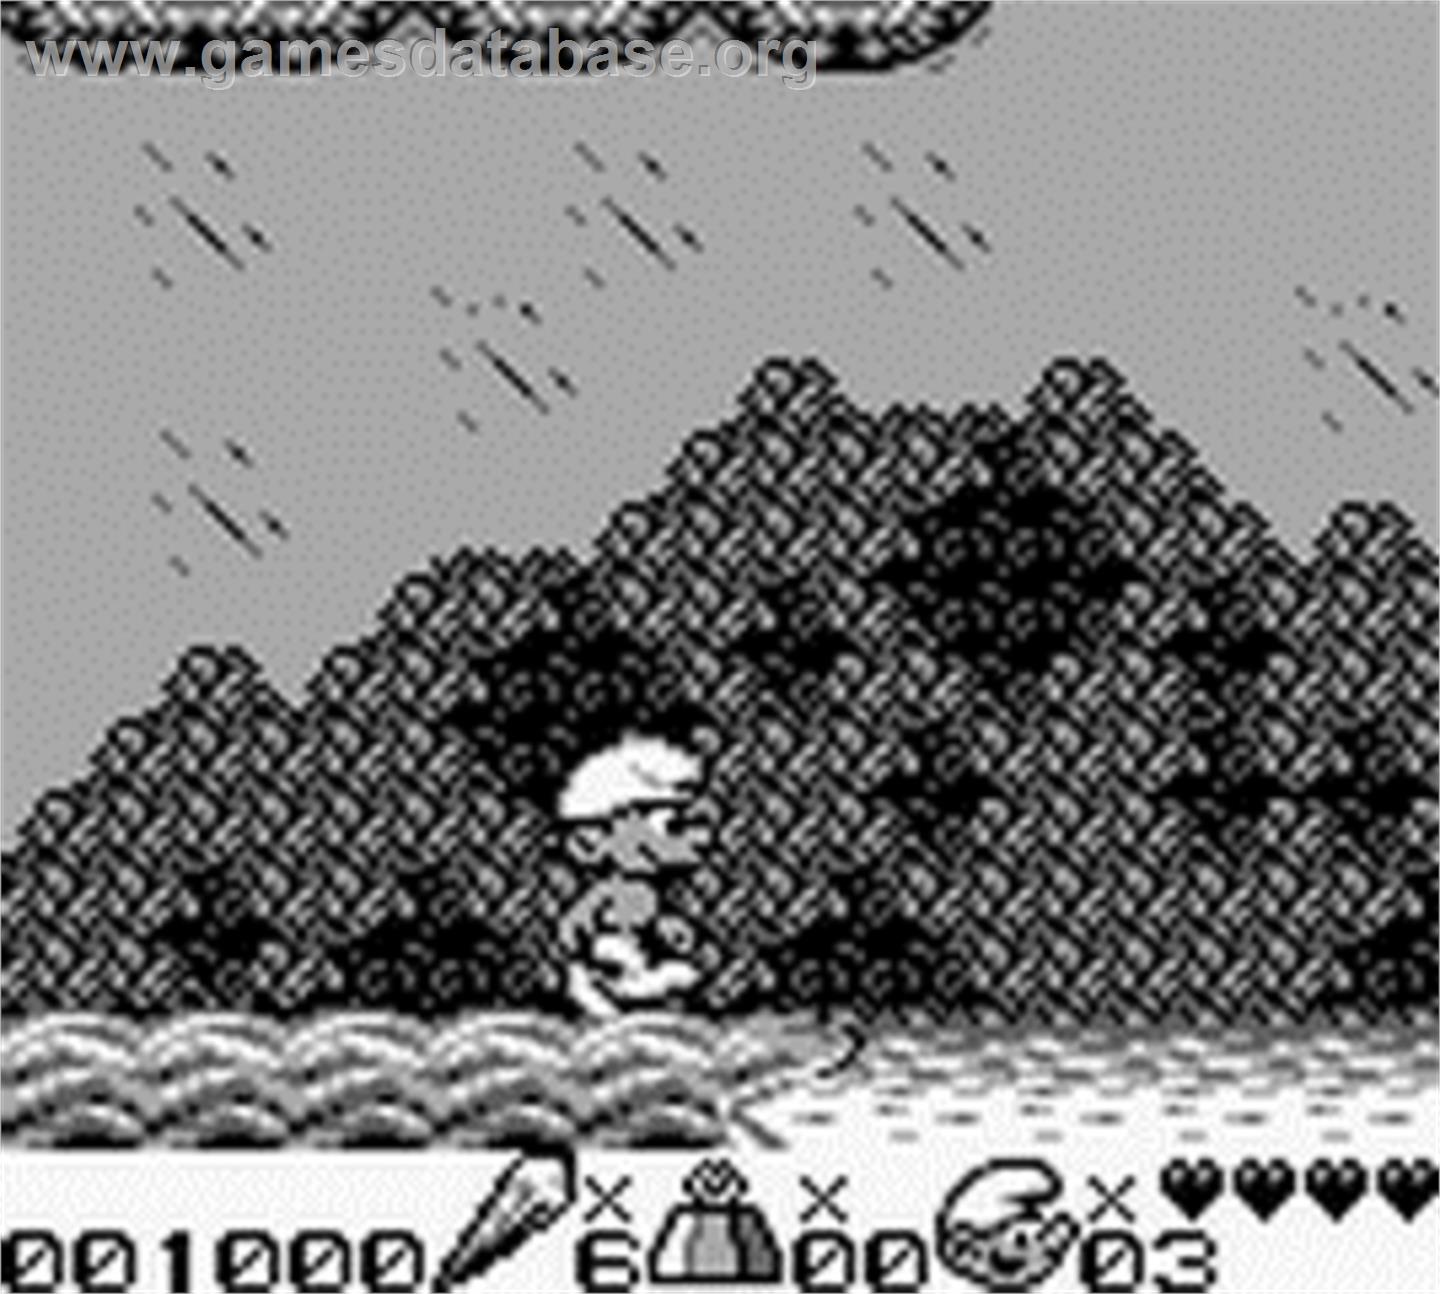 Smurfs Travel the World - Nintendo Game Boy - Artwork - In Game